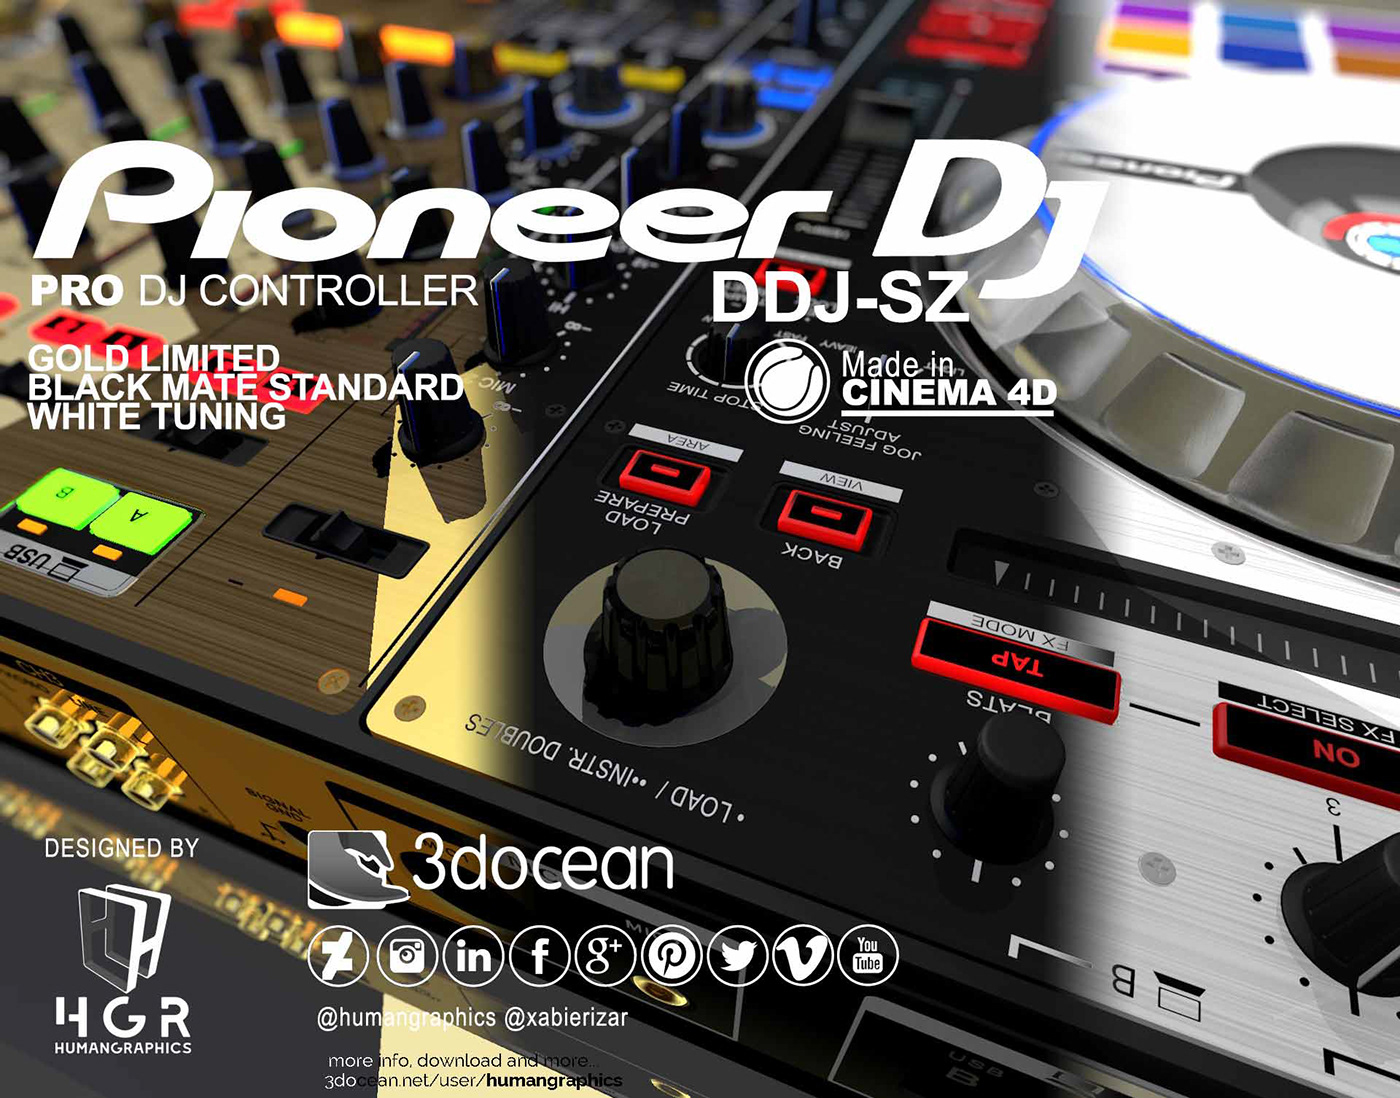 cinema 4d c4d 3D Render DJ controller turntables Pioneer pioneer dj cdj dj